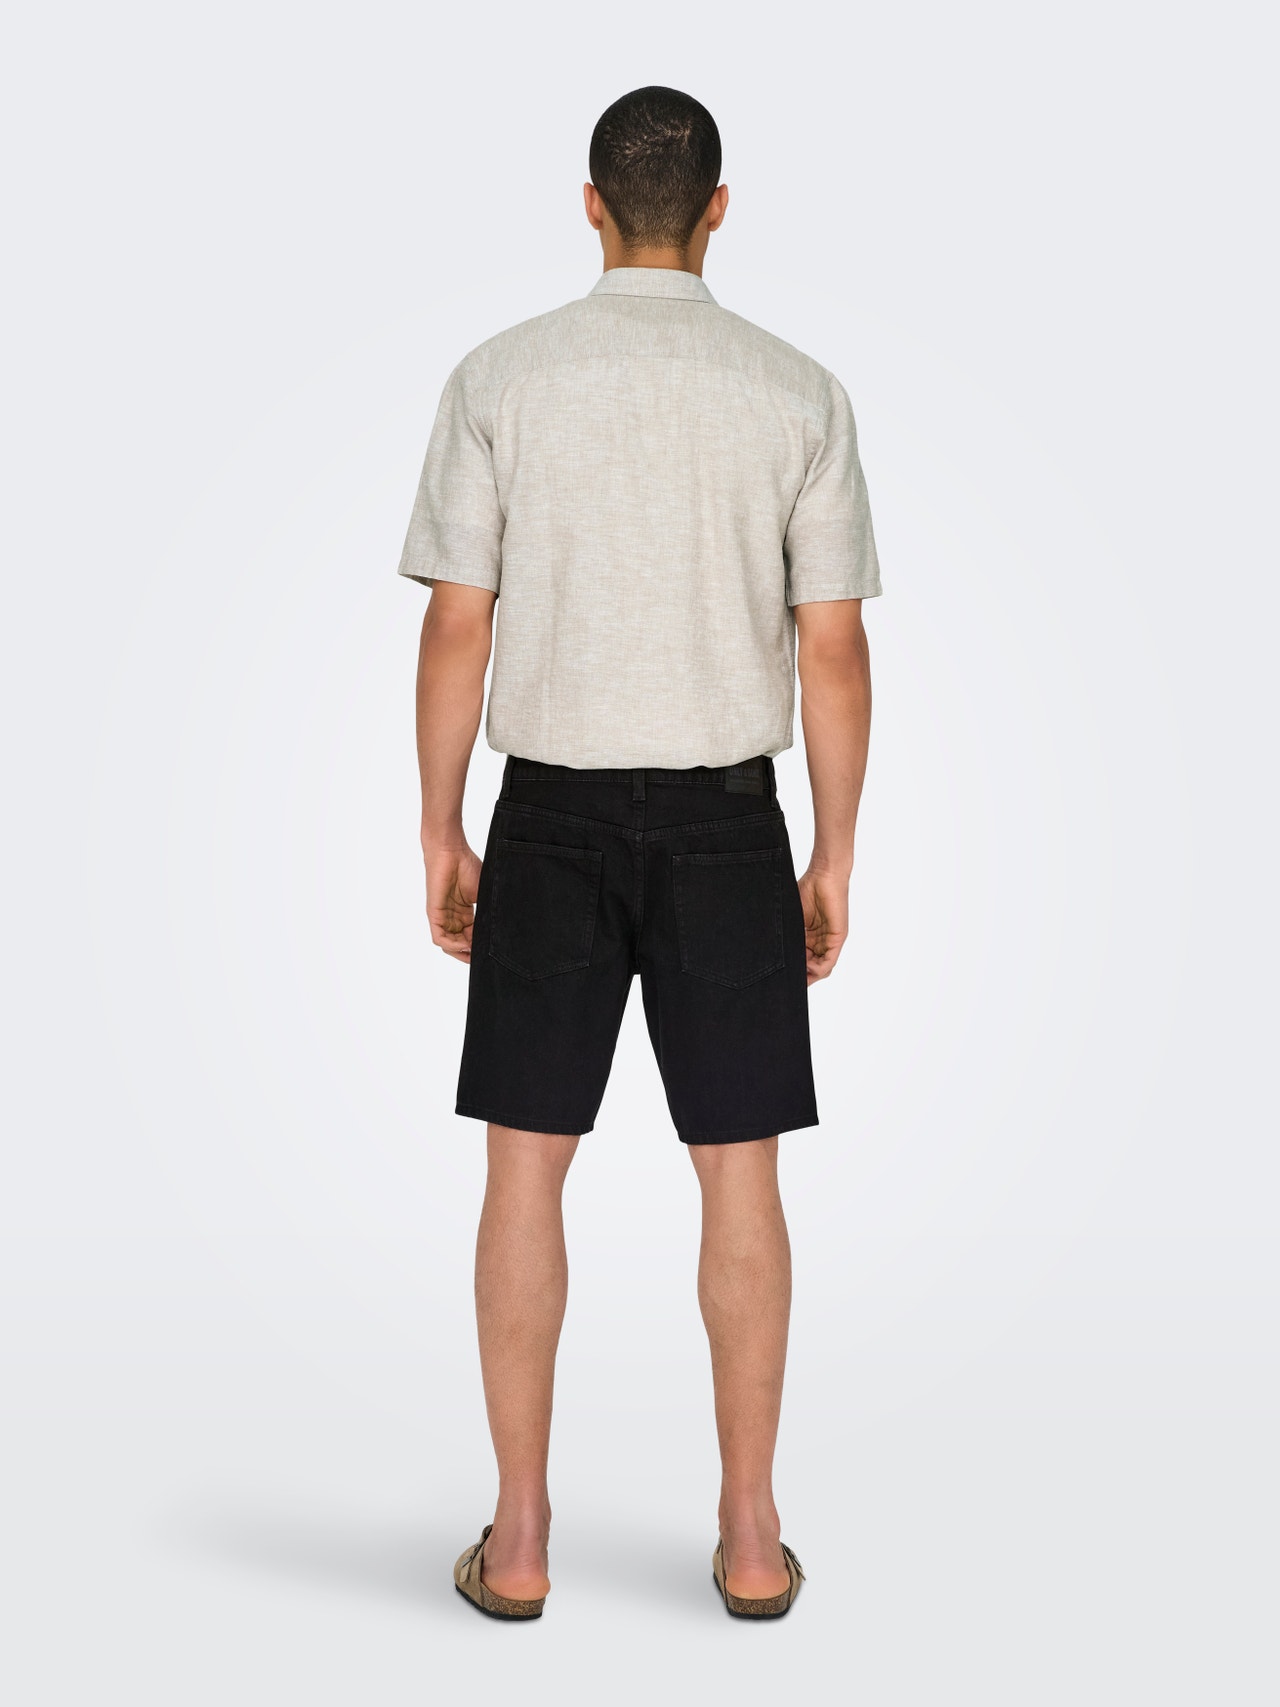 ONLY & SONS Normal geschnitten Mittlere Taille Shorts -Black Denim - 22028012